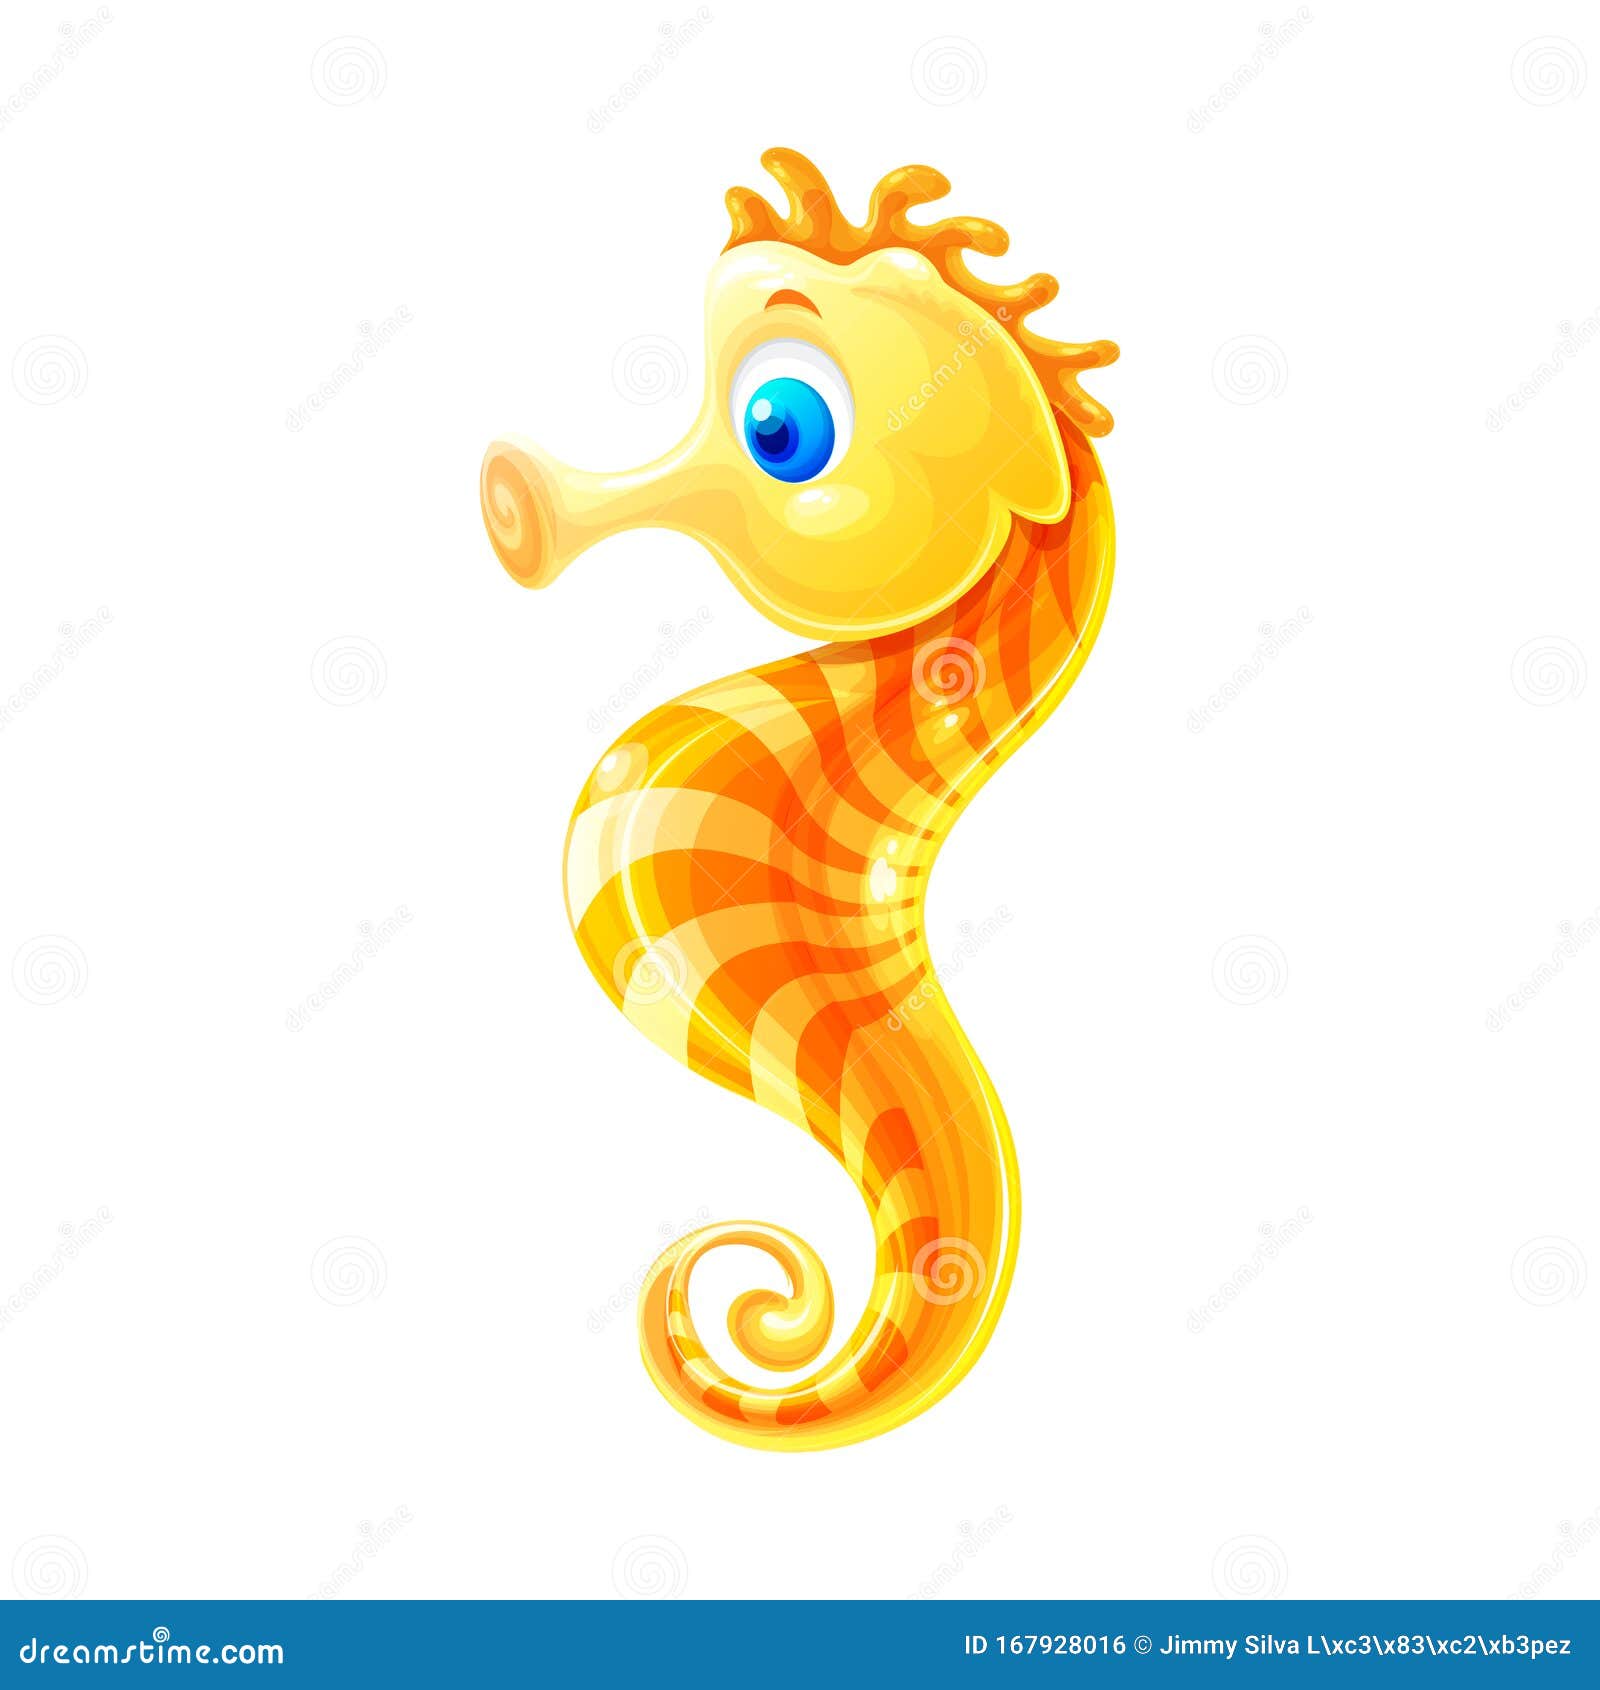 a gummy little seahorse